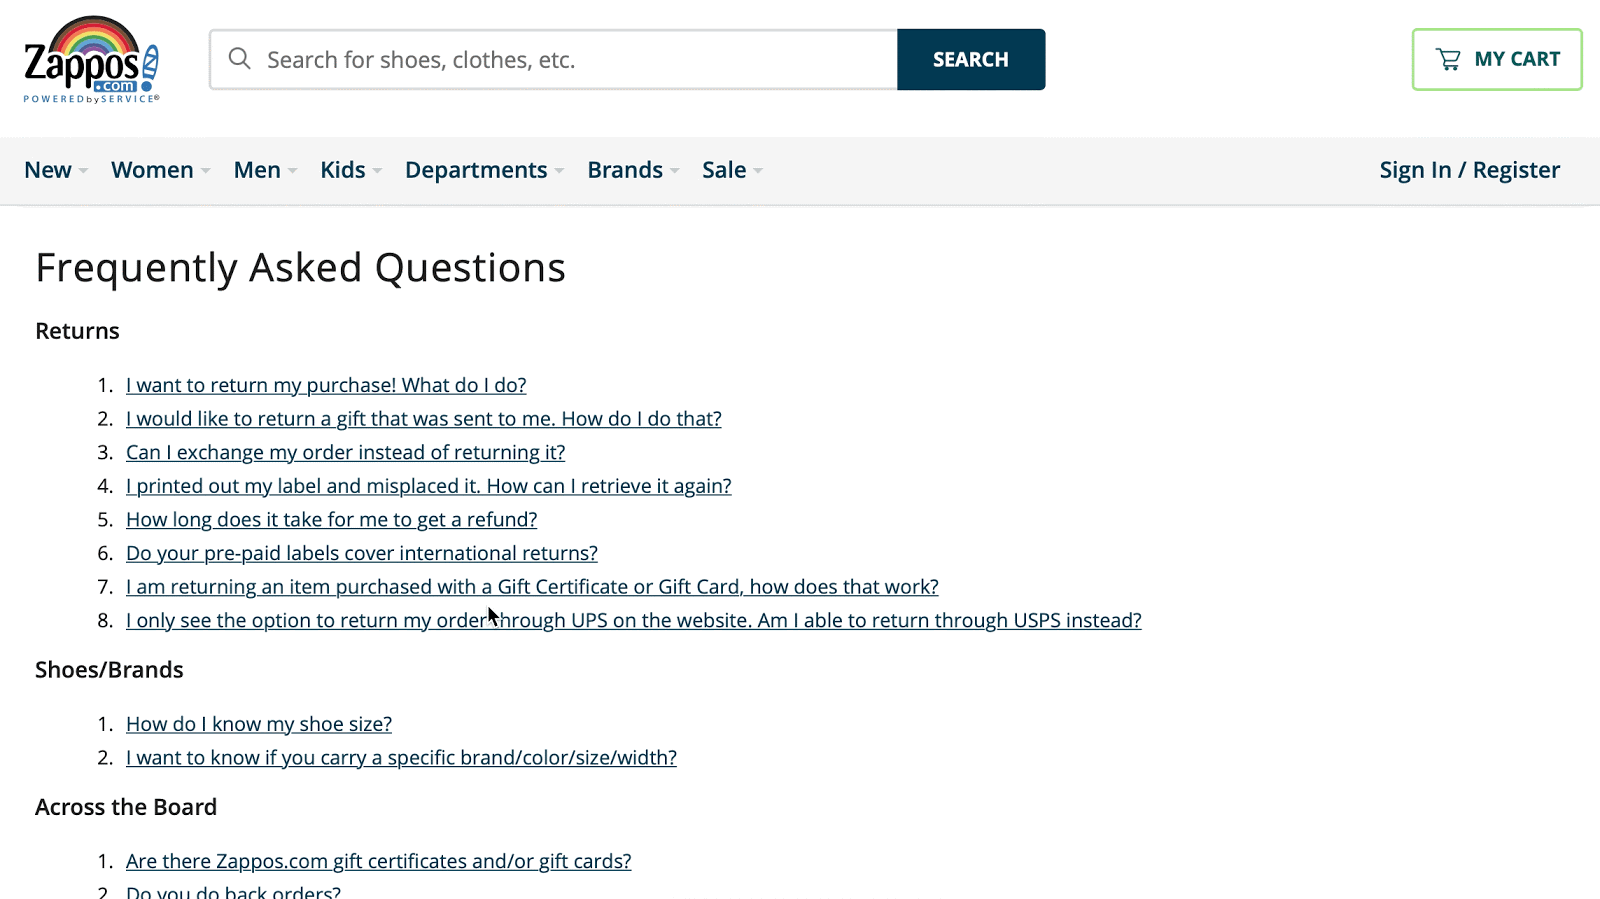 FAQ section at Zappos